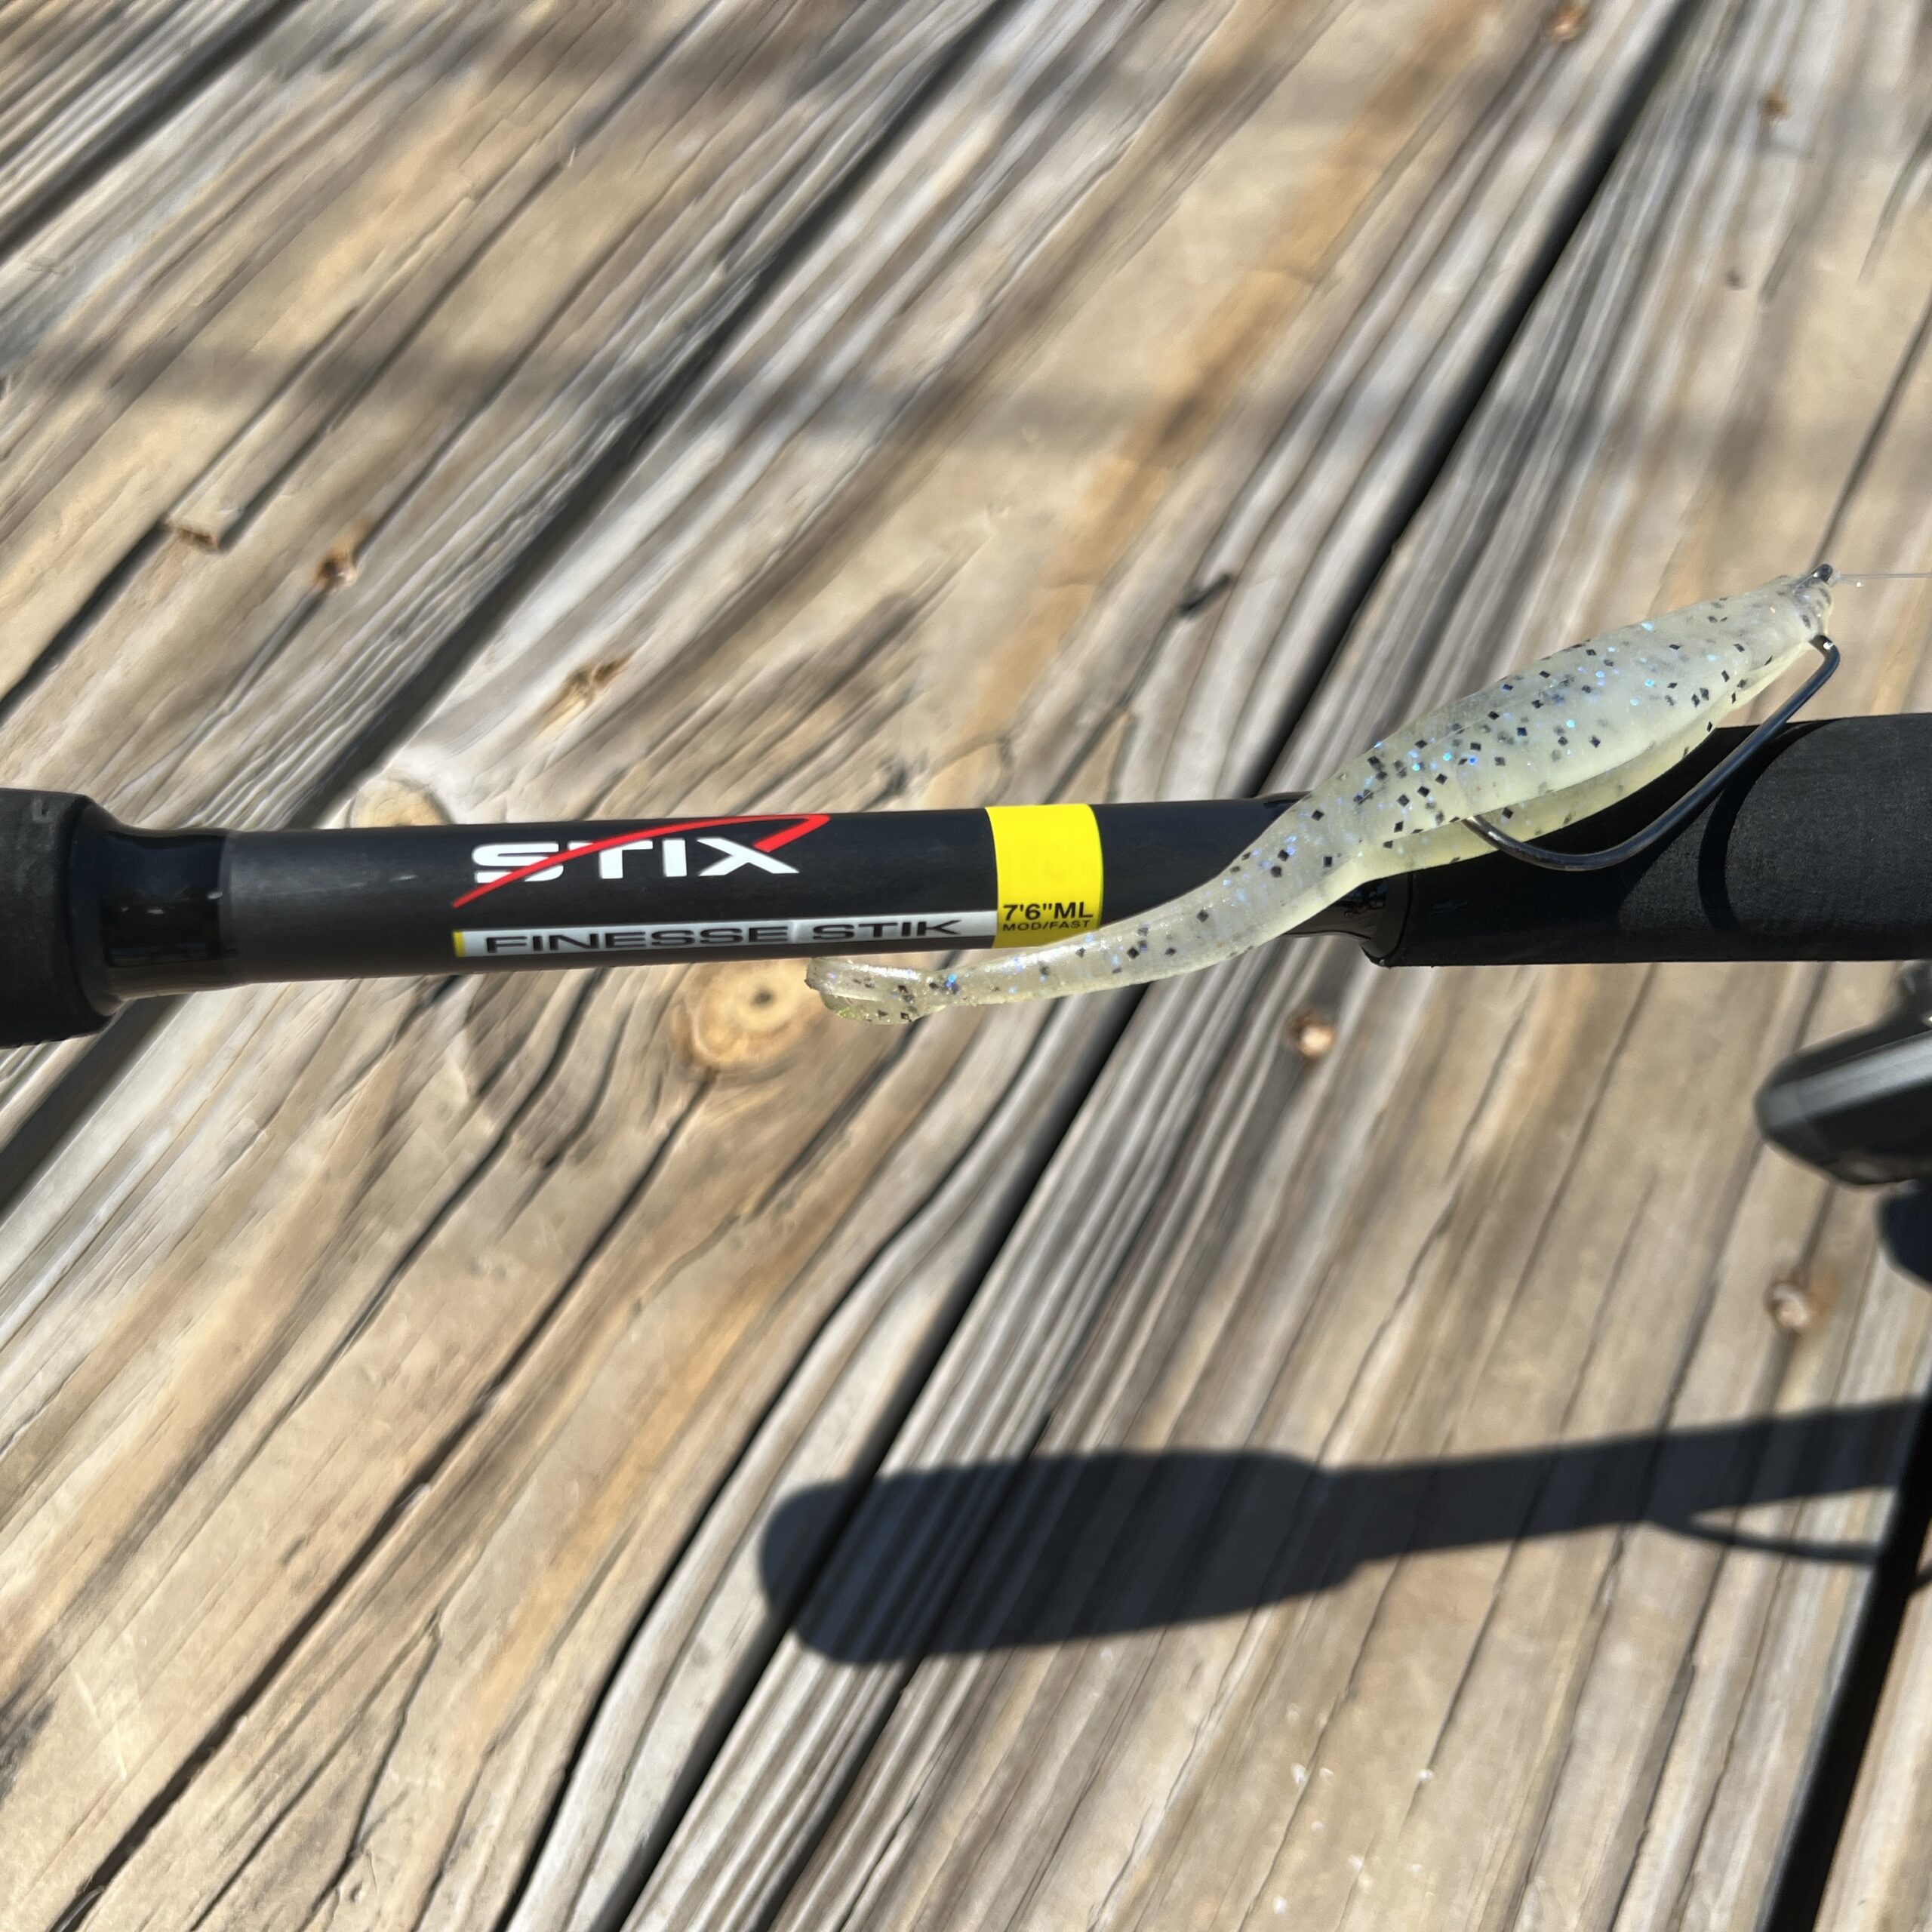 STIX Fishing – All you need in six